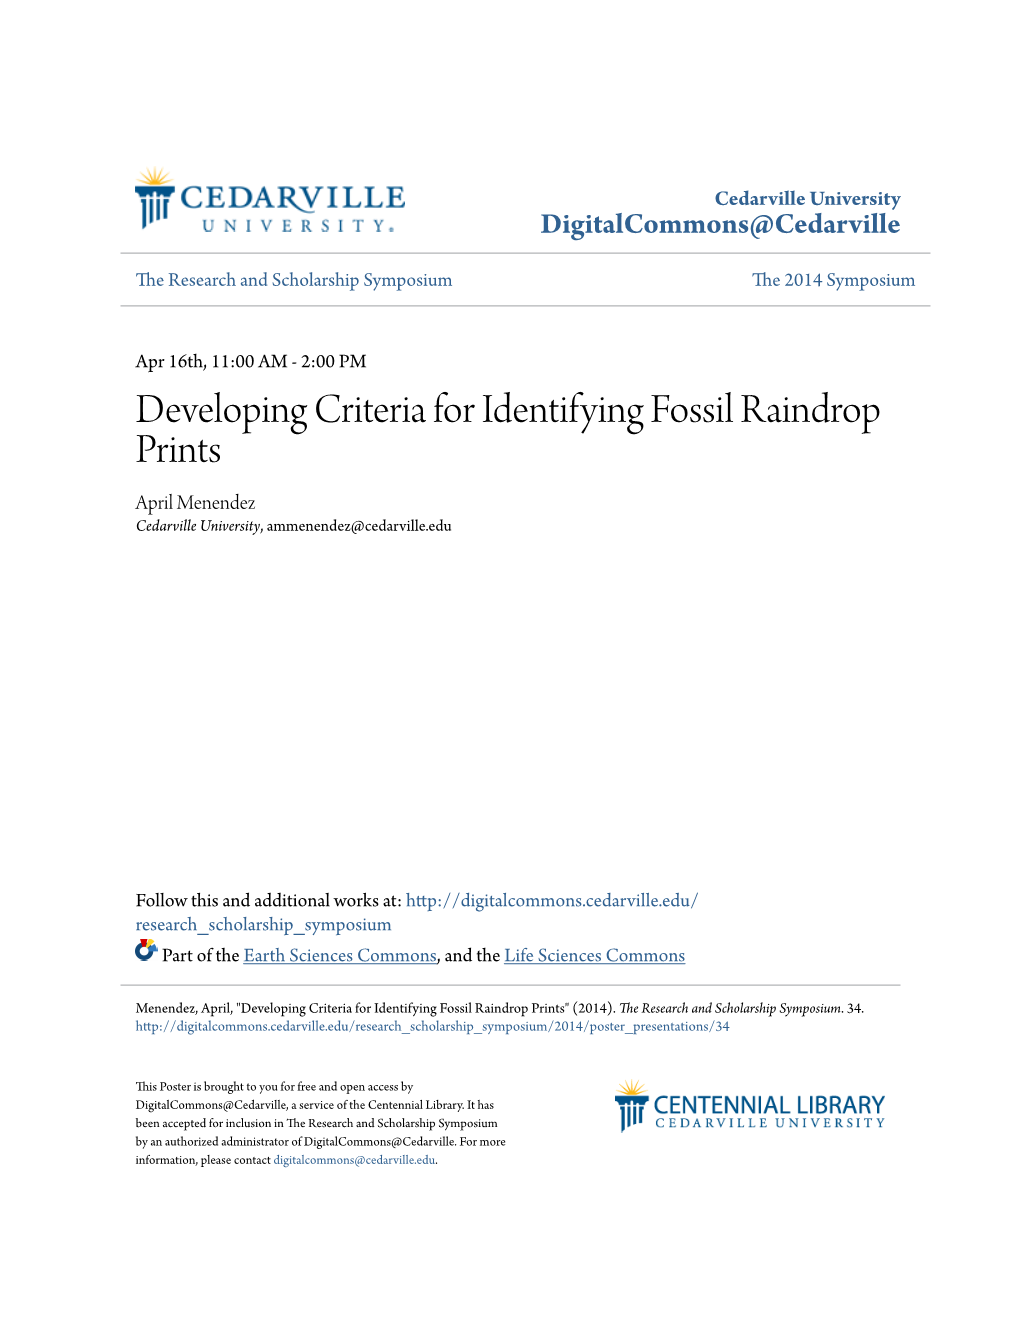 Developing Criteria for Identifying Fossil Raindrop Prints April Menendez Cedarville University, Ammenendez@Cedarville.Edu